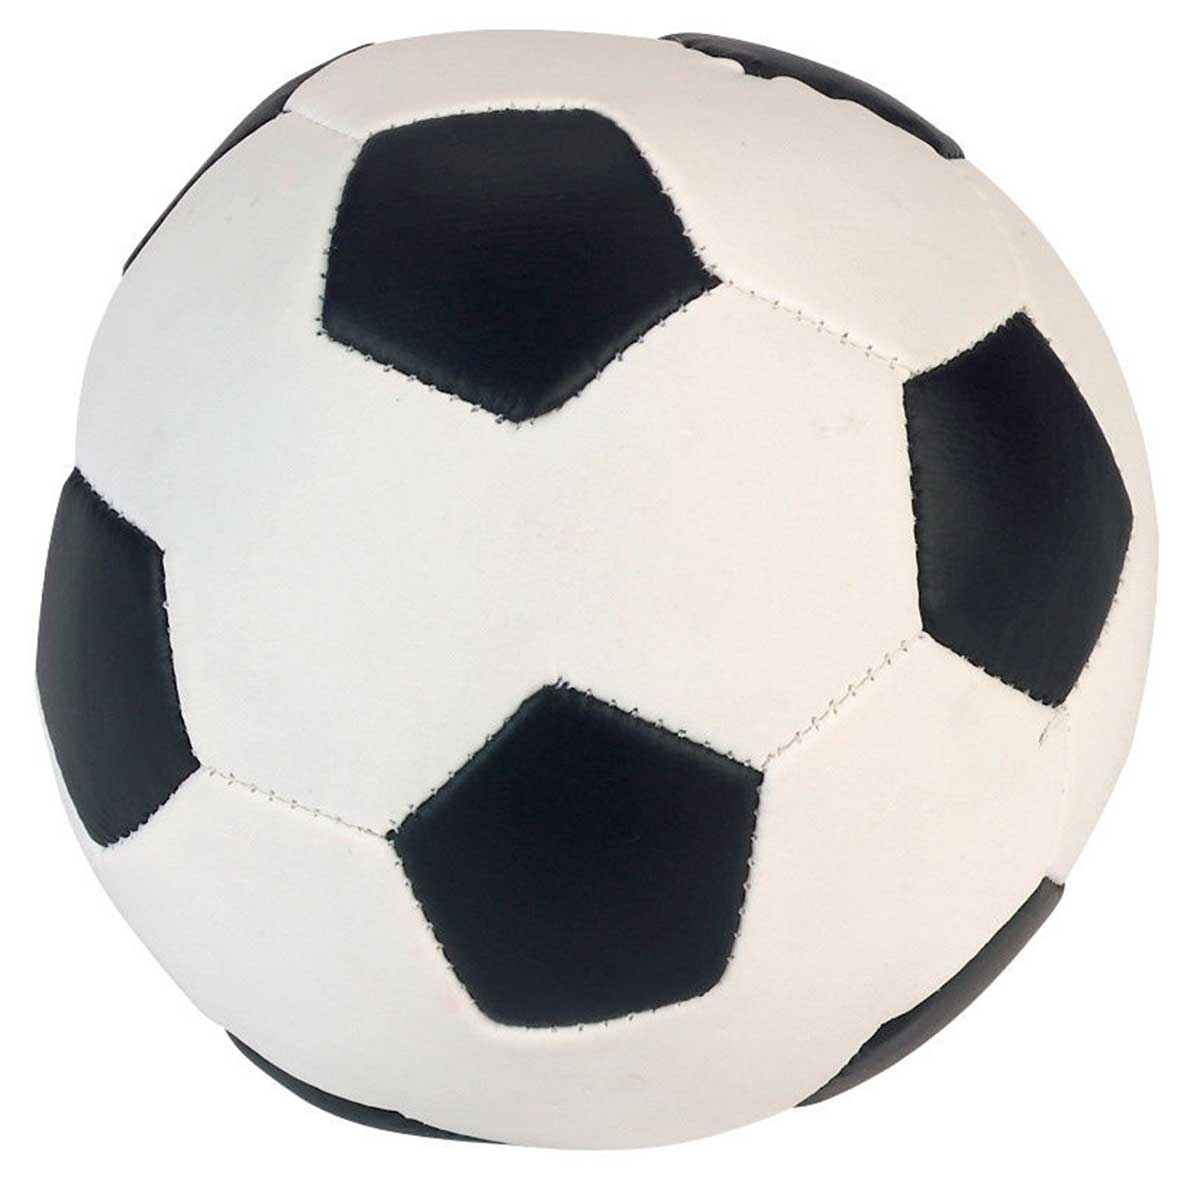 Soft-Fußball Hundespielzeug 11 cm